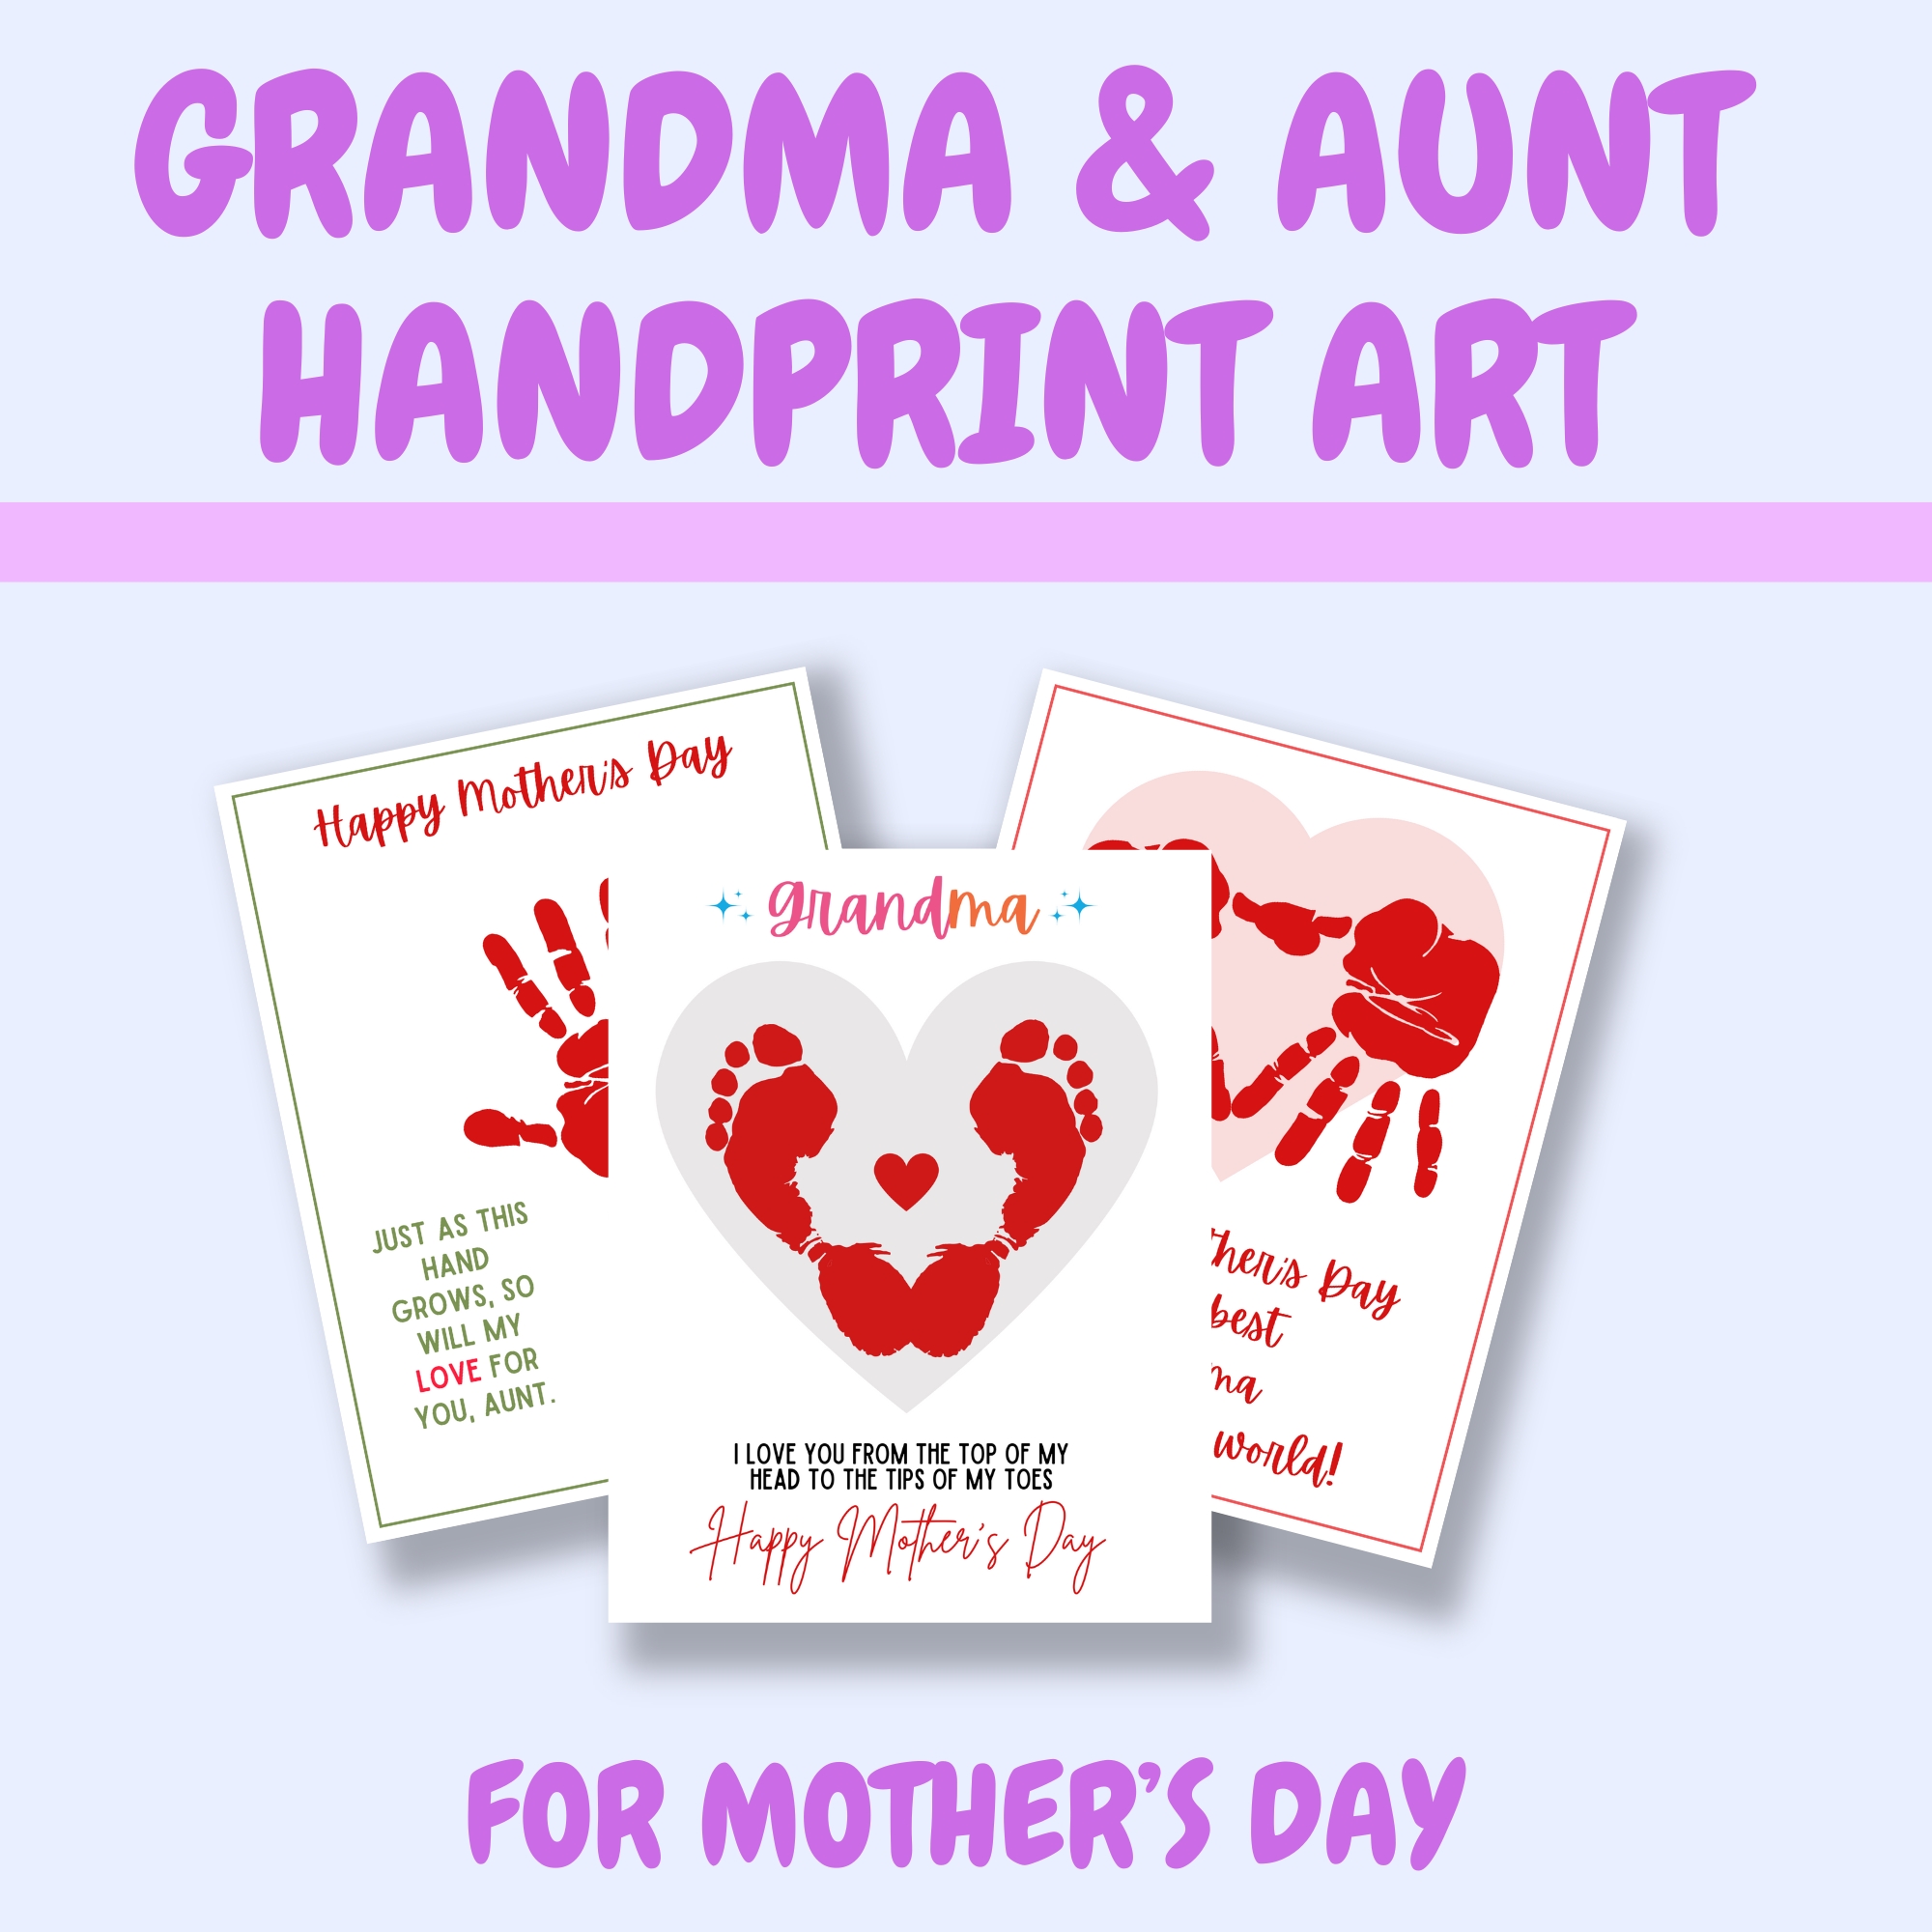 Grandma & Aunt Mother's Day Handprint Art